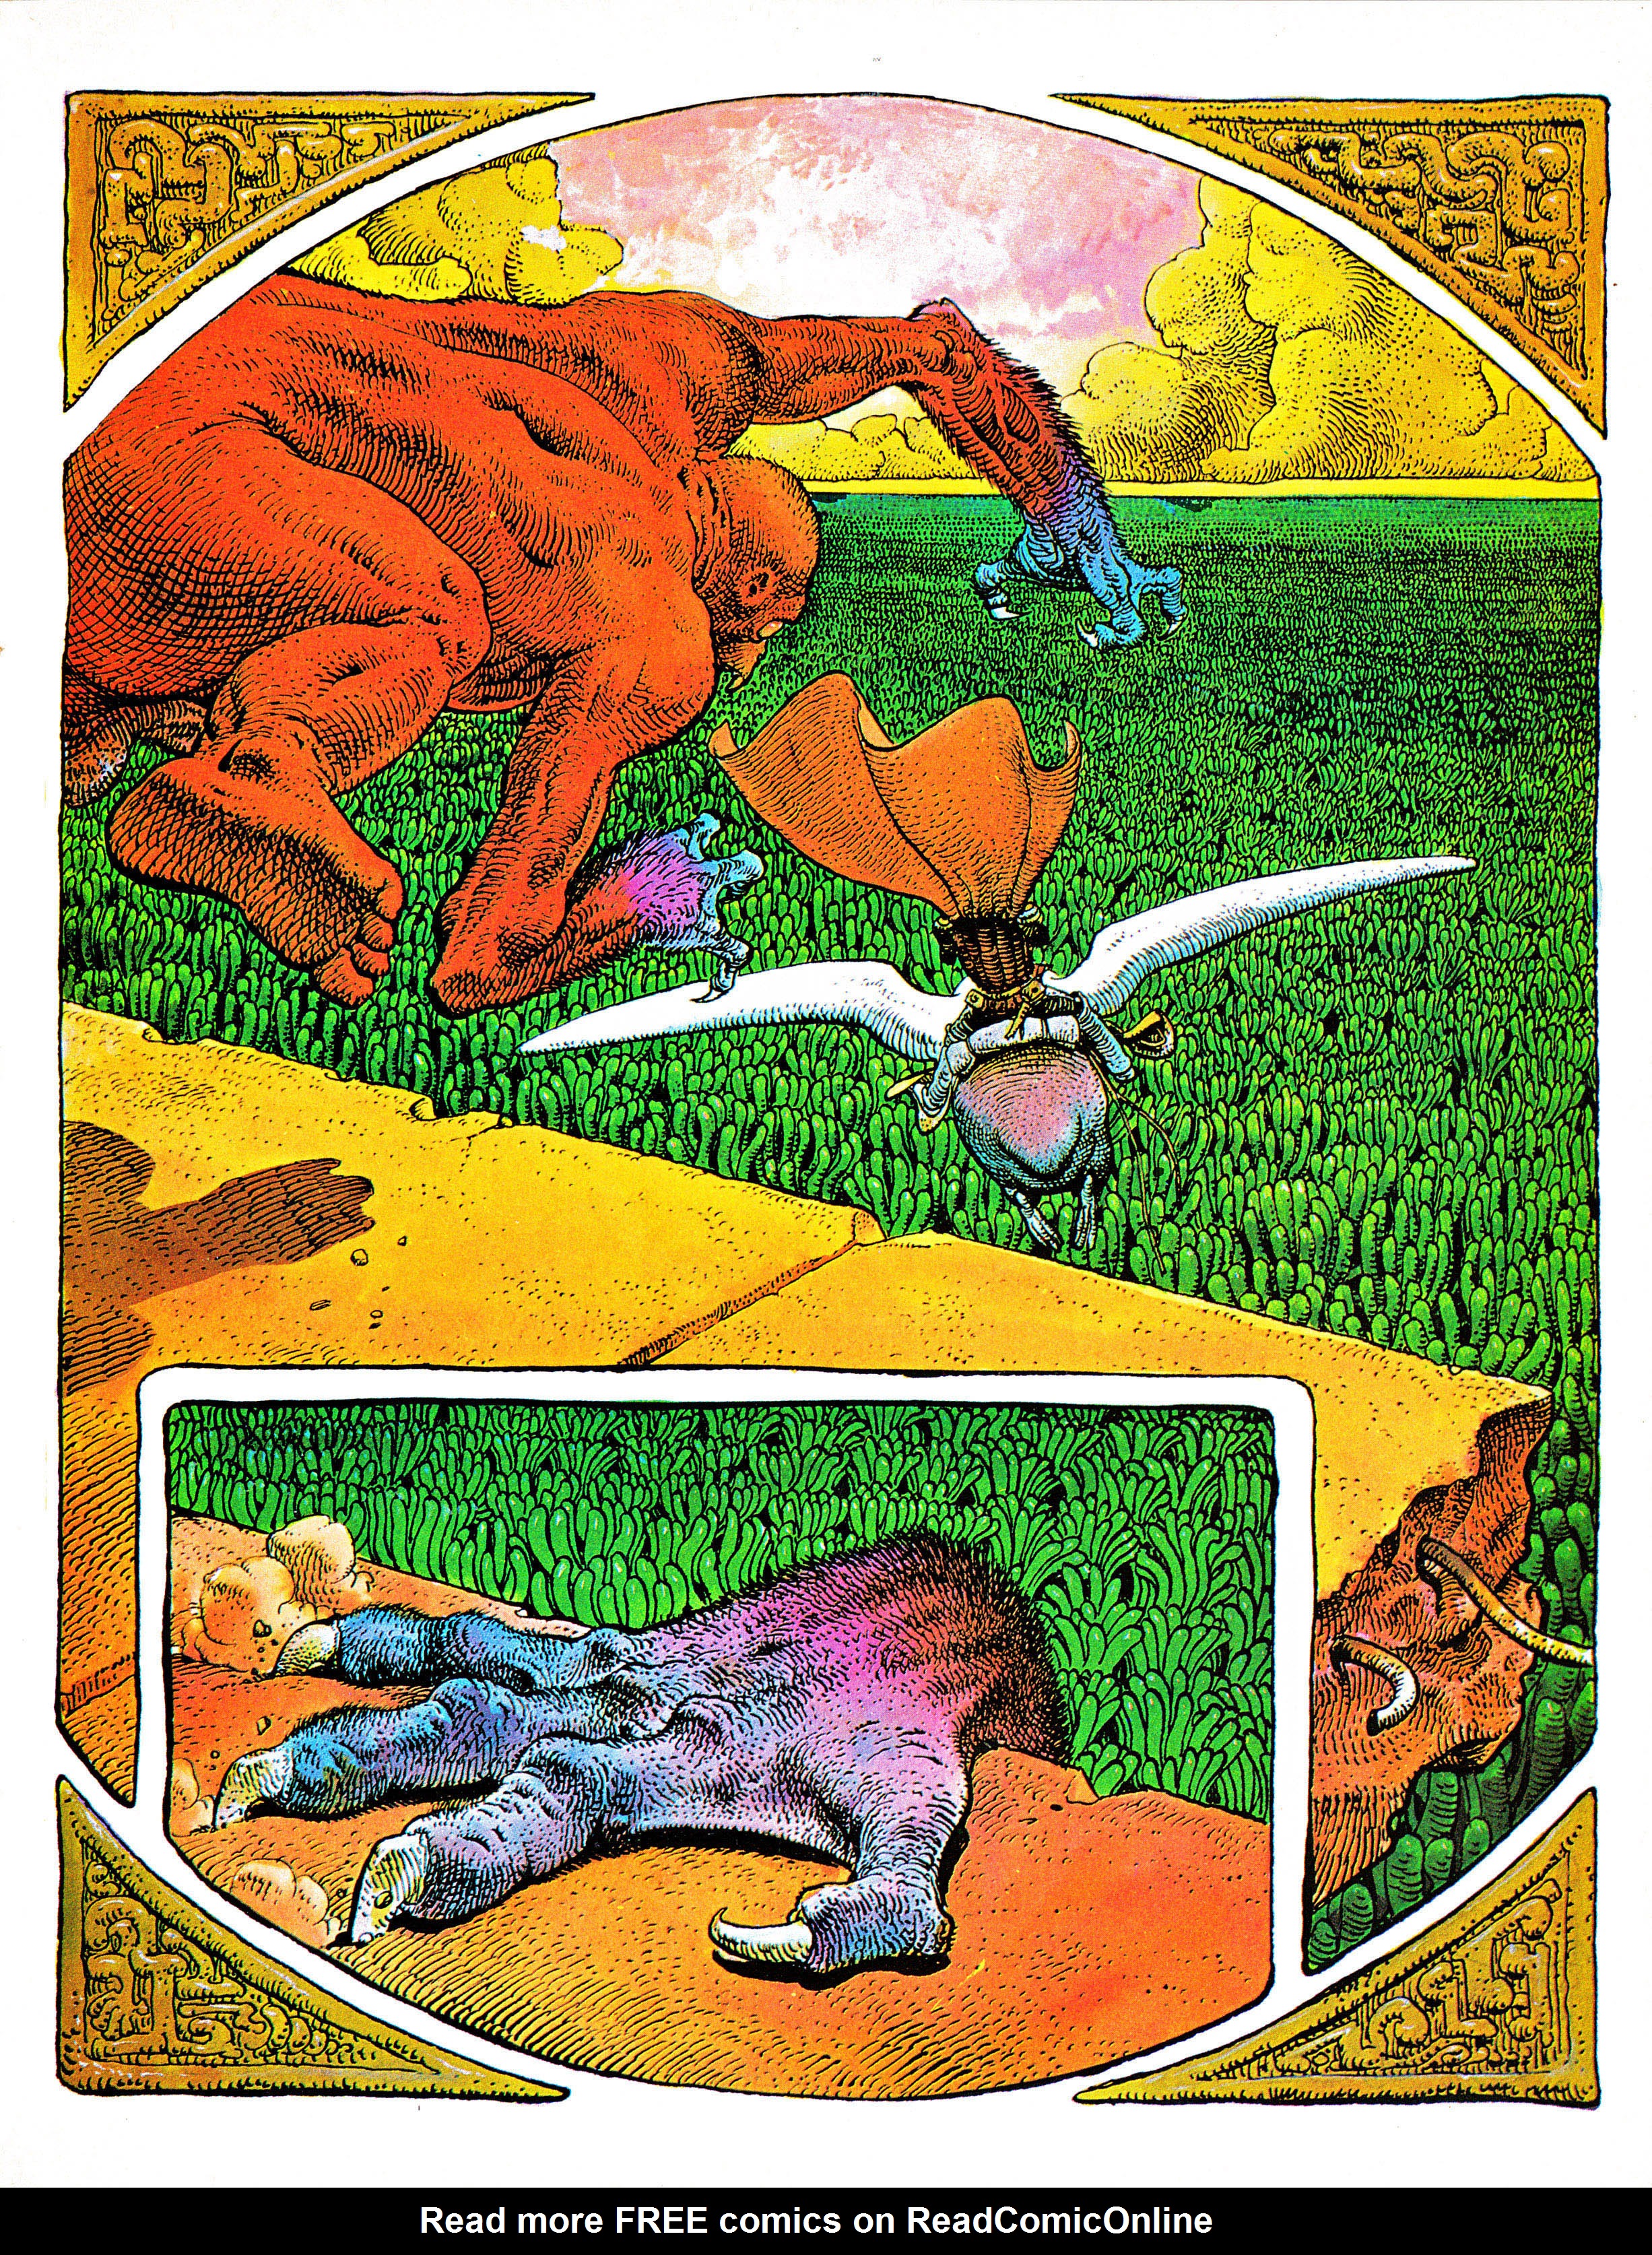 Read online Epic Graphic Novel: Moebius comic -  Issue # TPB 2 - 20